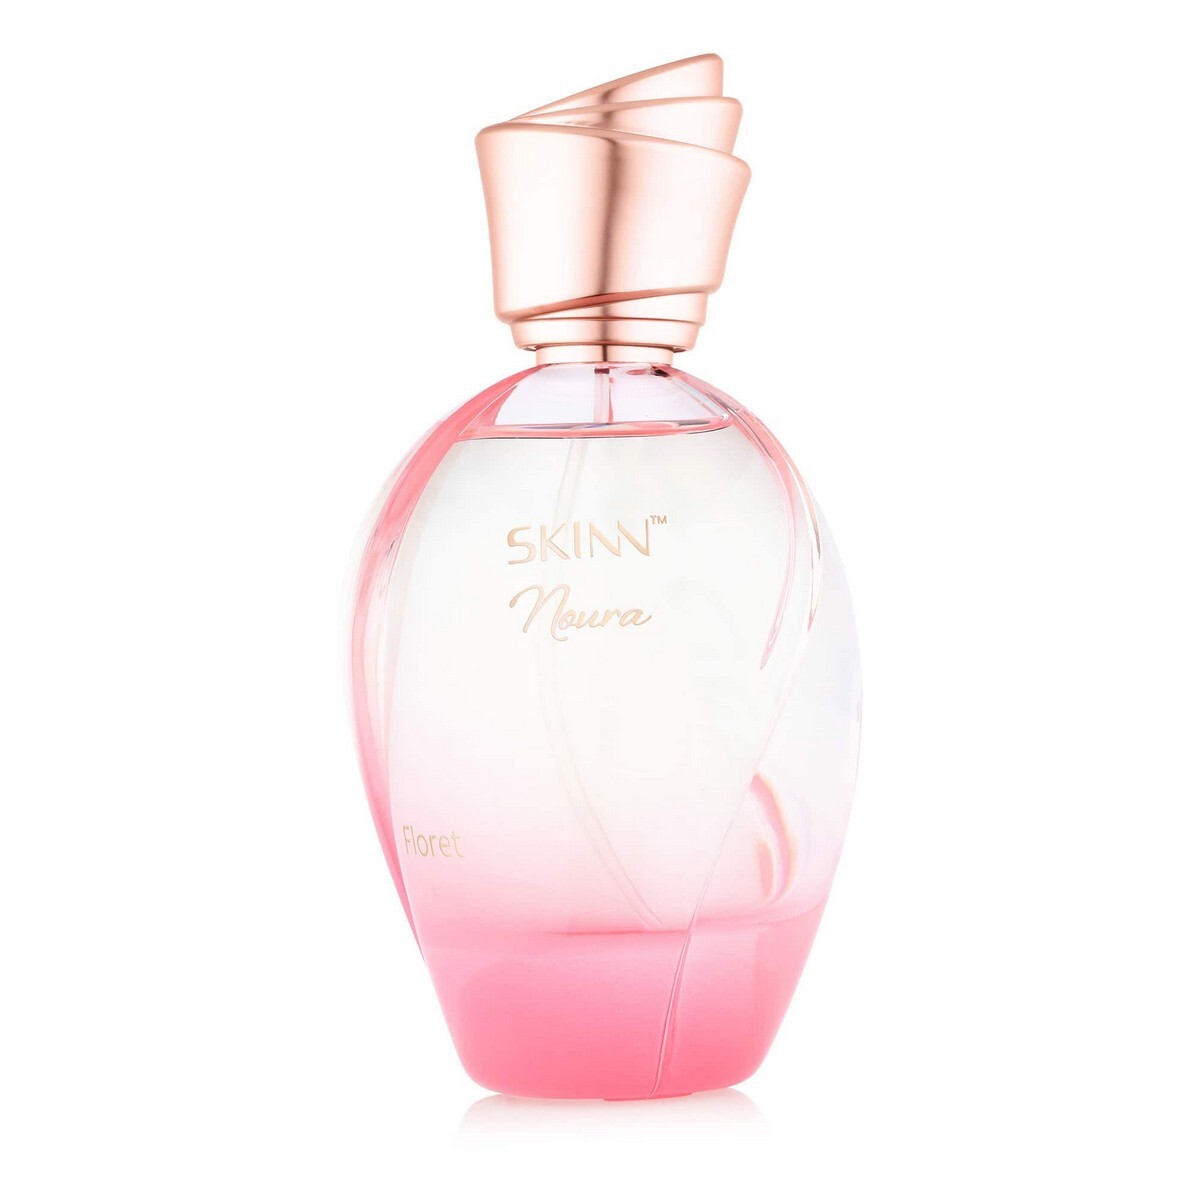 Skinn Noura Floret Eau De Parfum For Her 100 ml